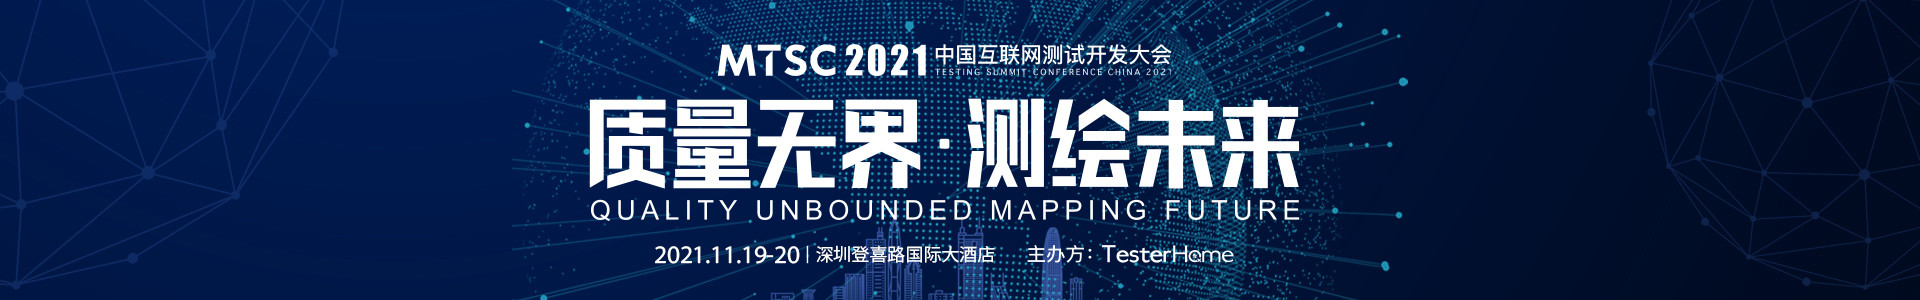 MTSC2021中國互聯網測試開發大會深圳站